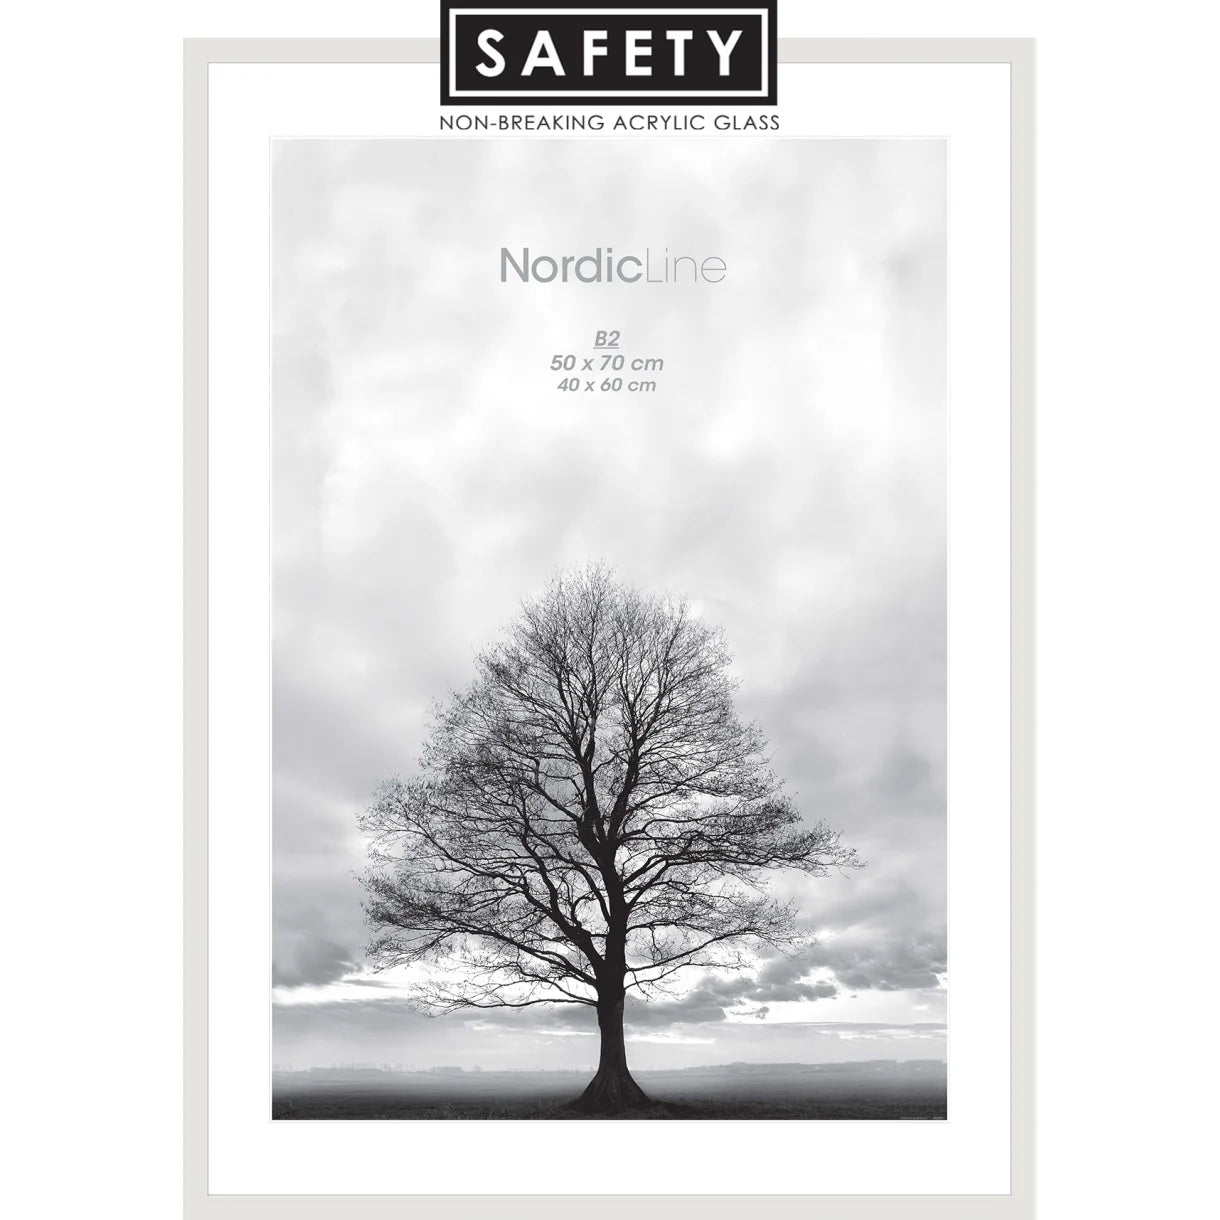 INCADO Κορνίζα Κορνίζα Nordic Line Slim Safety Modern Άσπρο Ξύλο Ακ. Γυαλί 50x70 cm INCADO